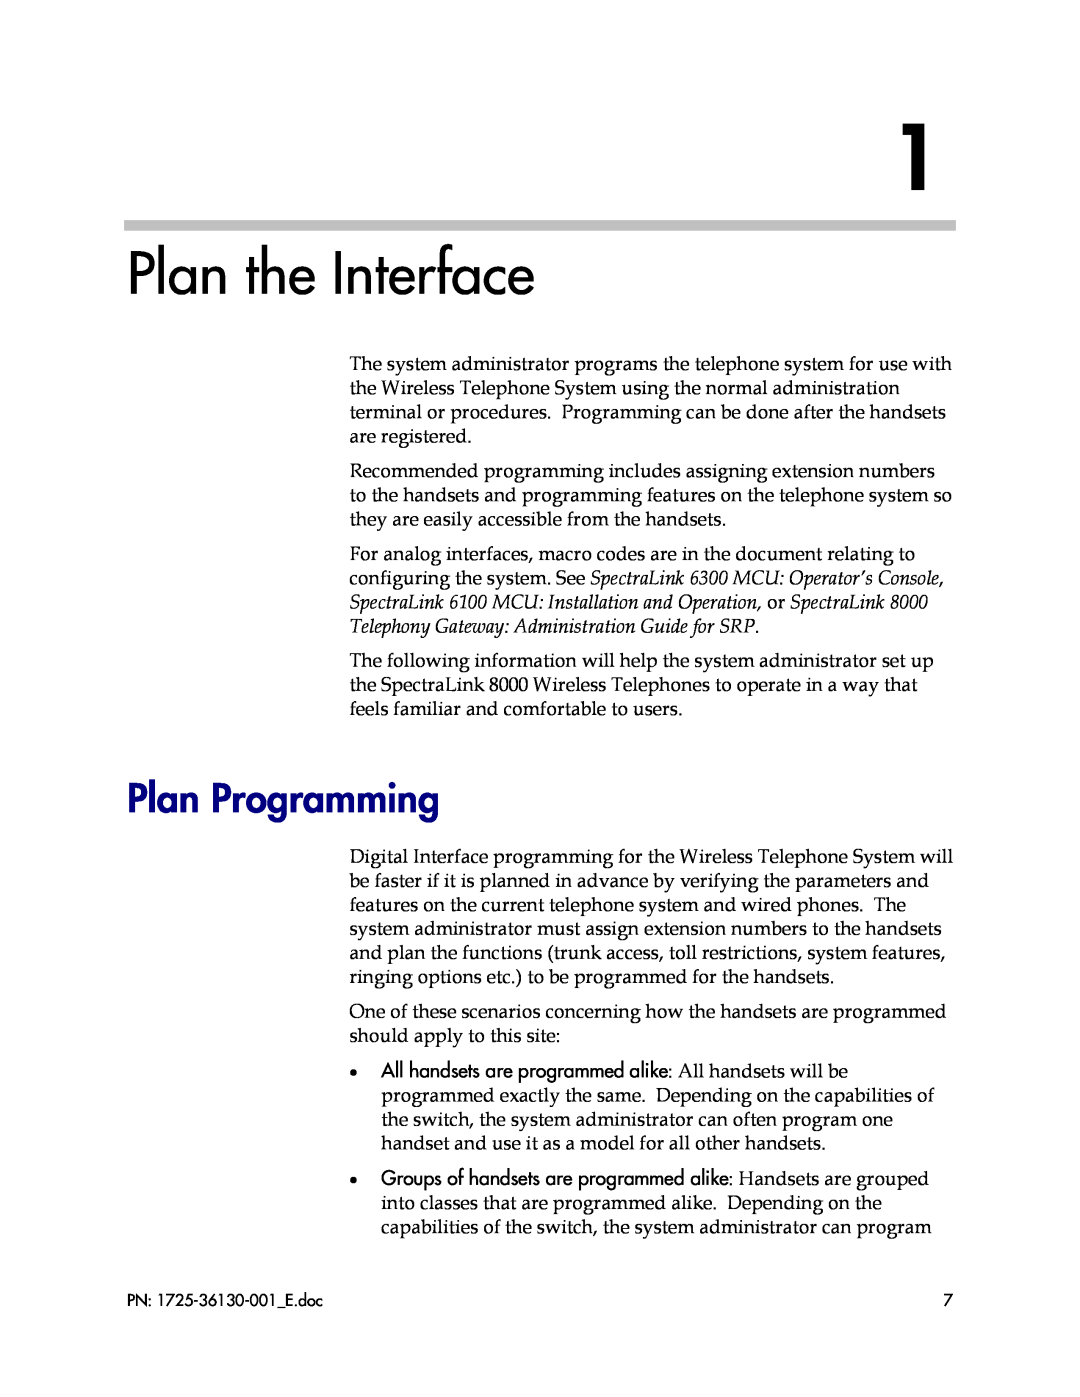 Polycom 1725-361300-001, SPECTRALINK 8000, SPECTRALINK 6000 manual Plan the Interface, Plan Programming 